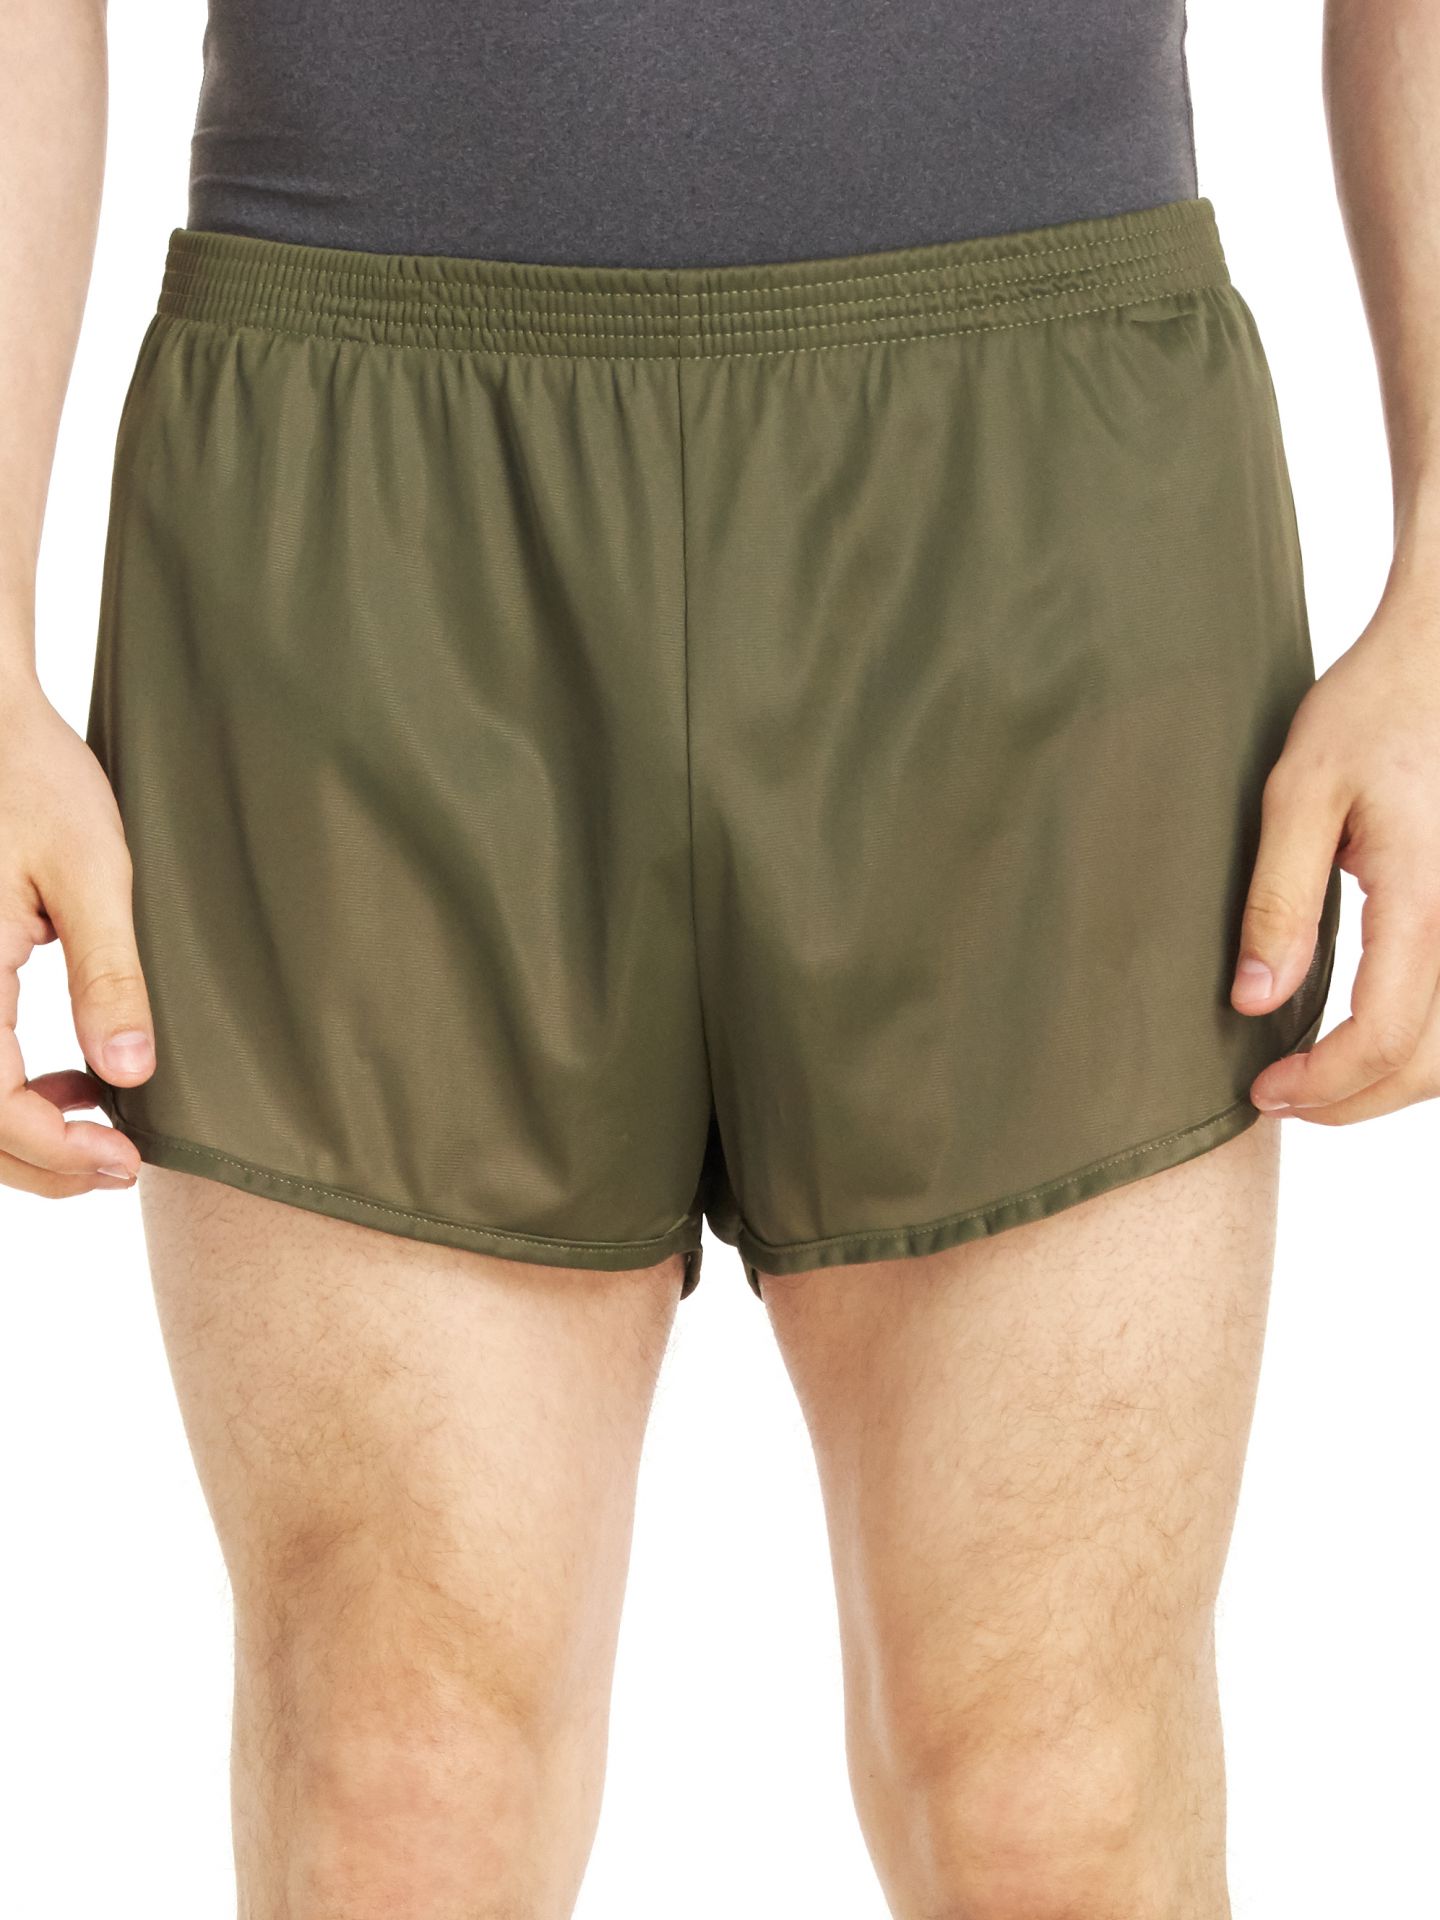 soffe shorts green